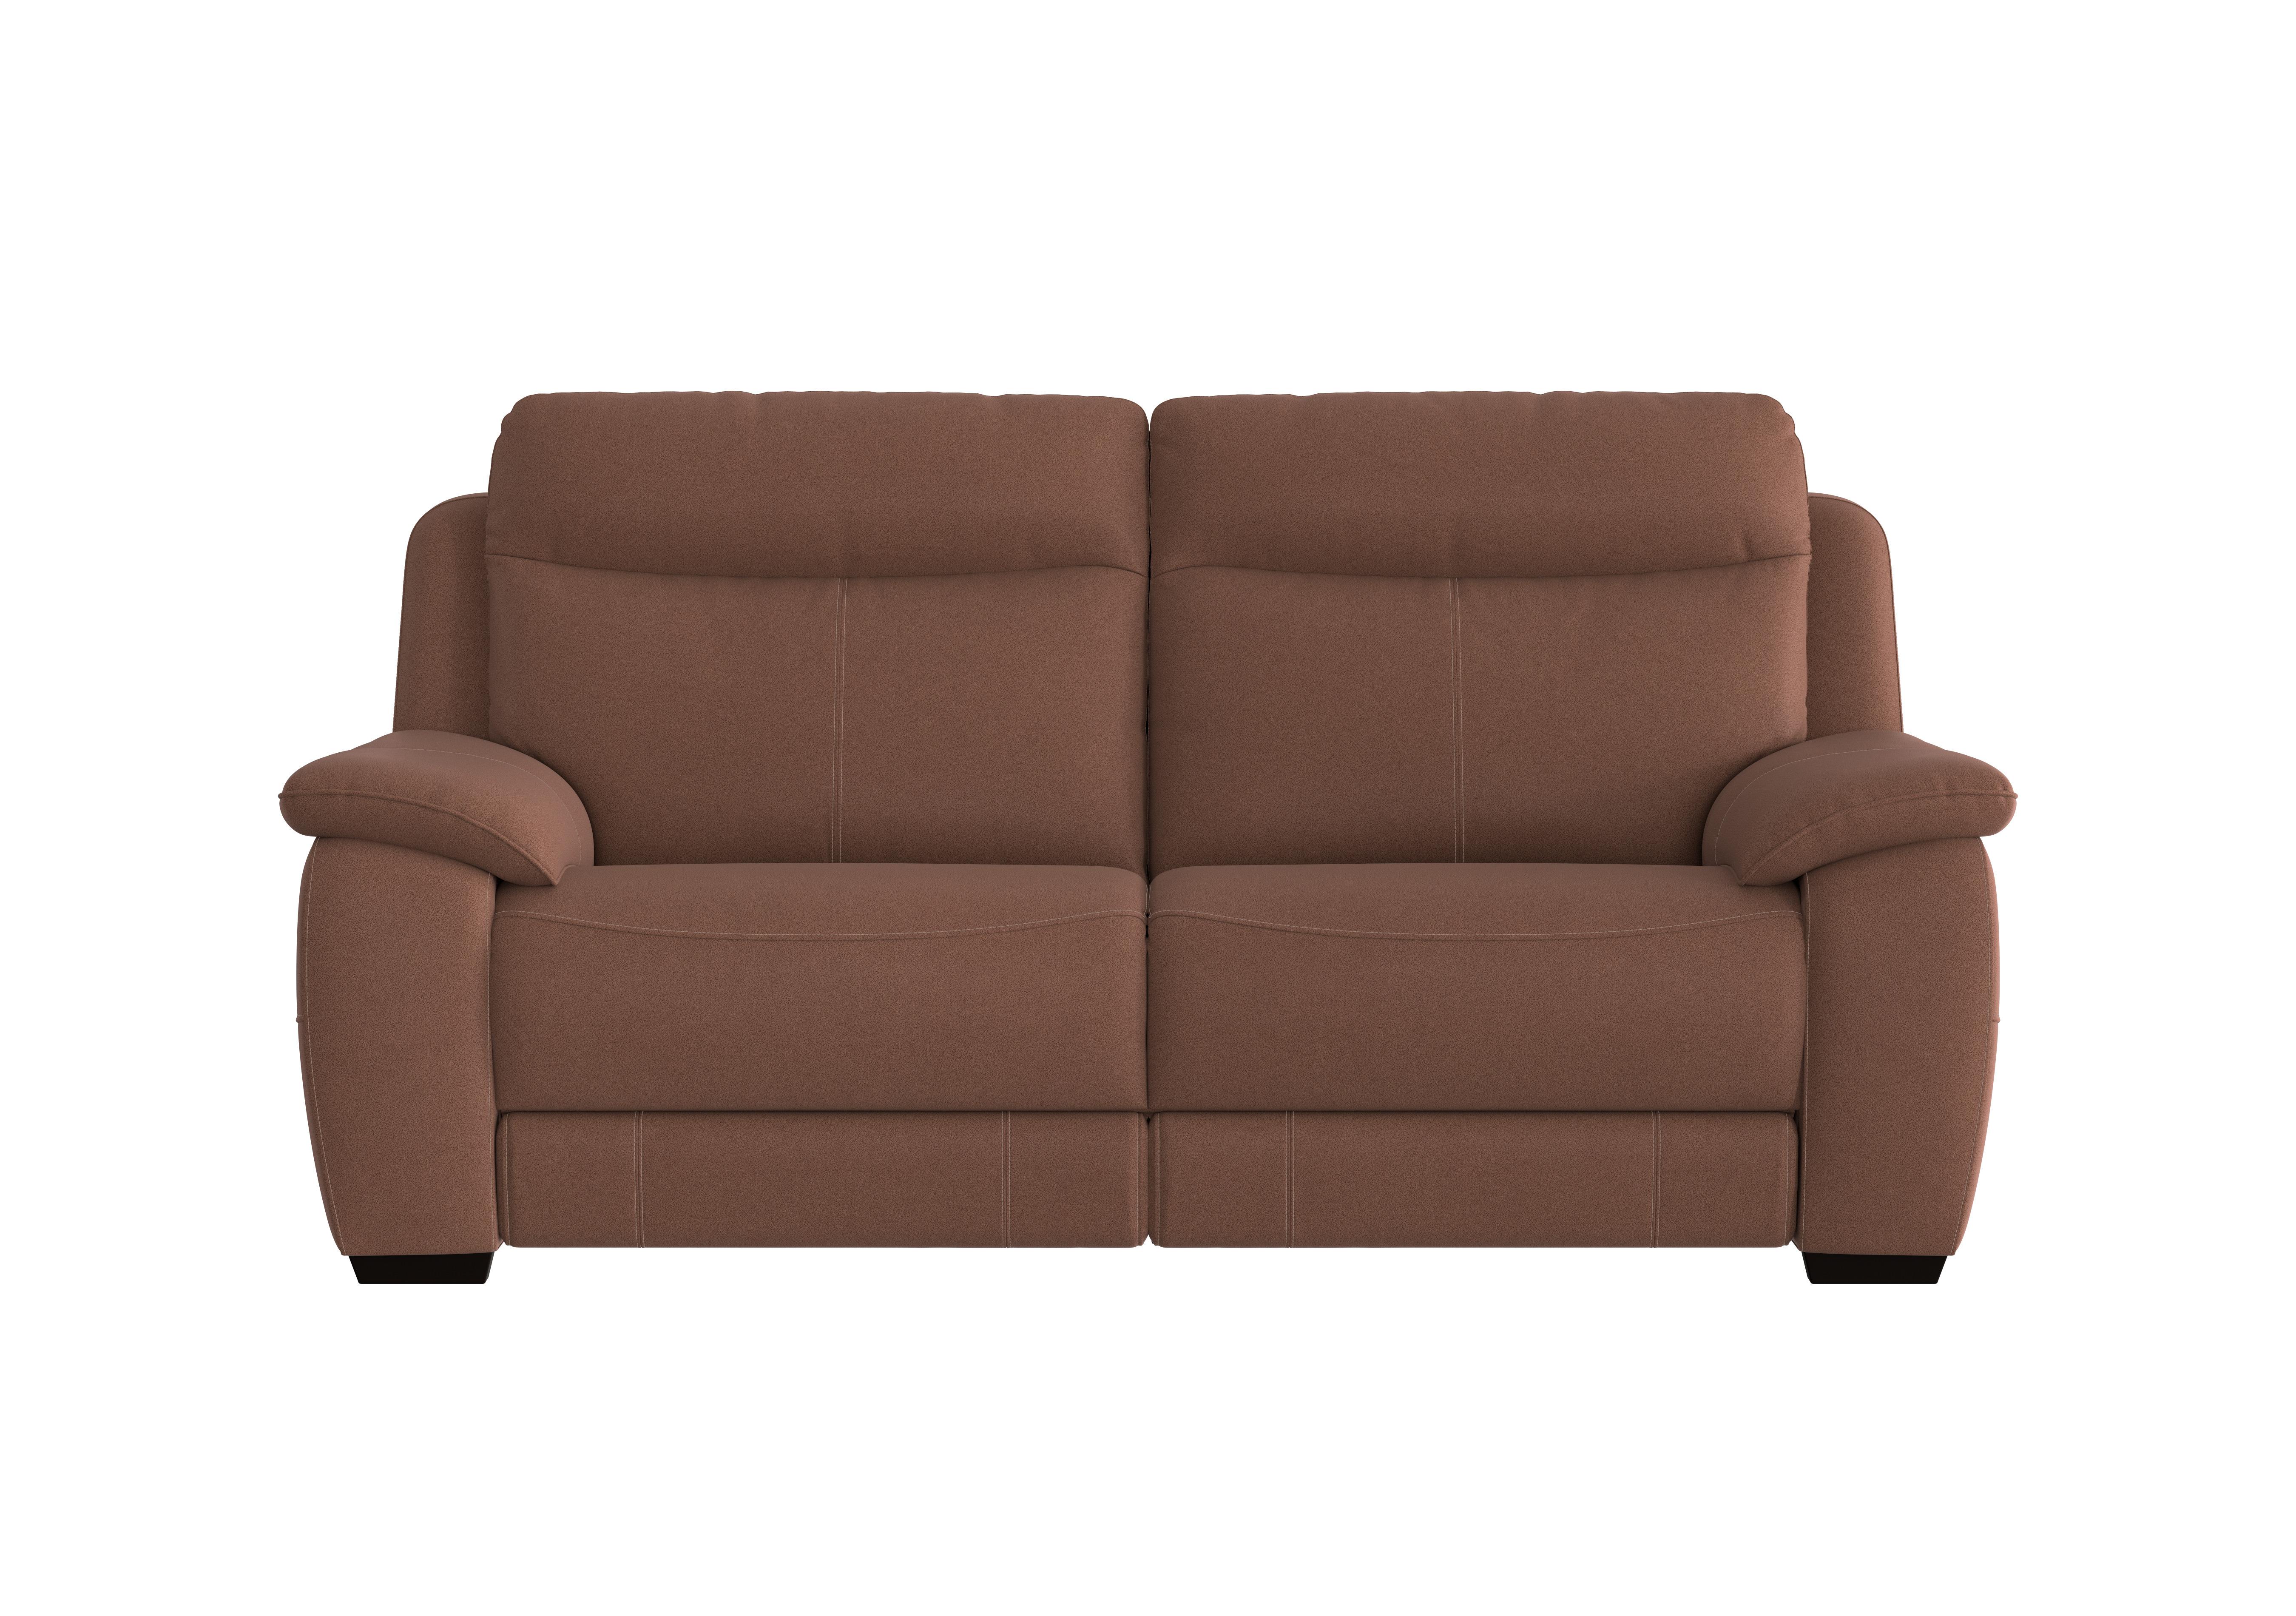 Starlight Express 3 Seater Fabric Recliner Sofa with Power Headrests in Bfa-Blj-R05 Hazelnut on Furniture Village